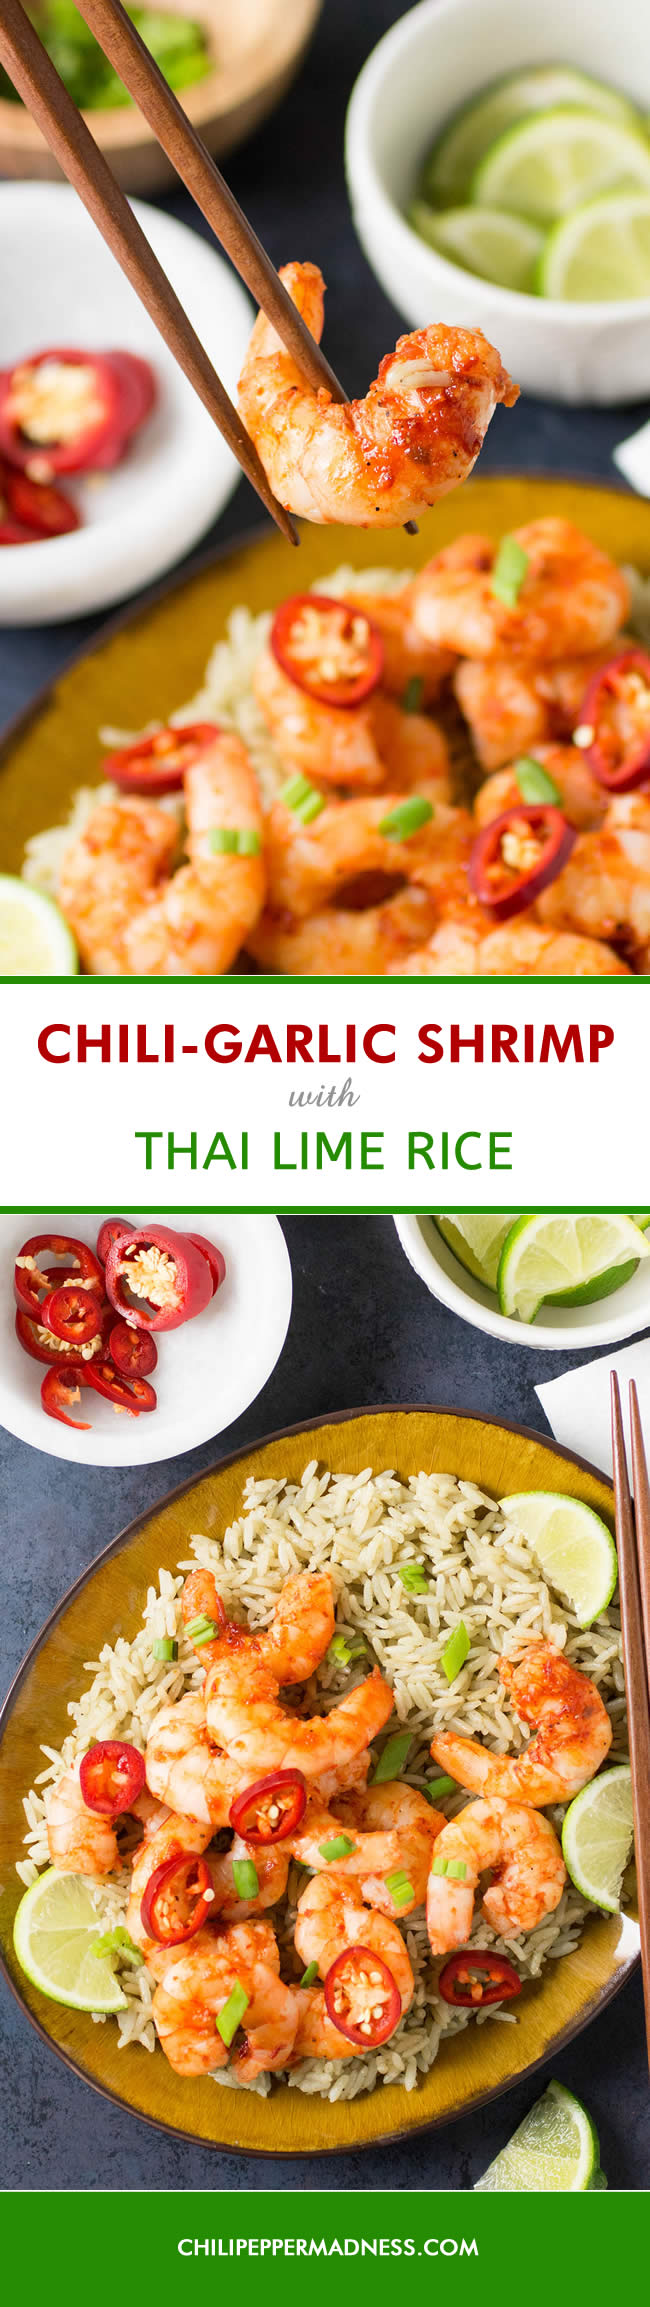 Chili-Garlic Shrimp with Thai Lime Rice - Recipe